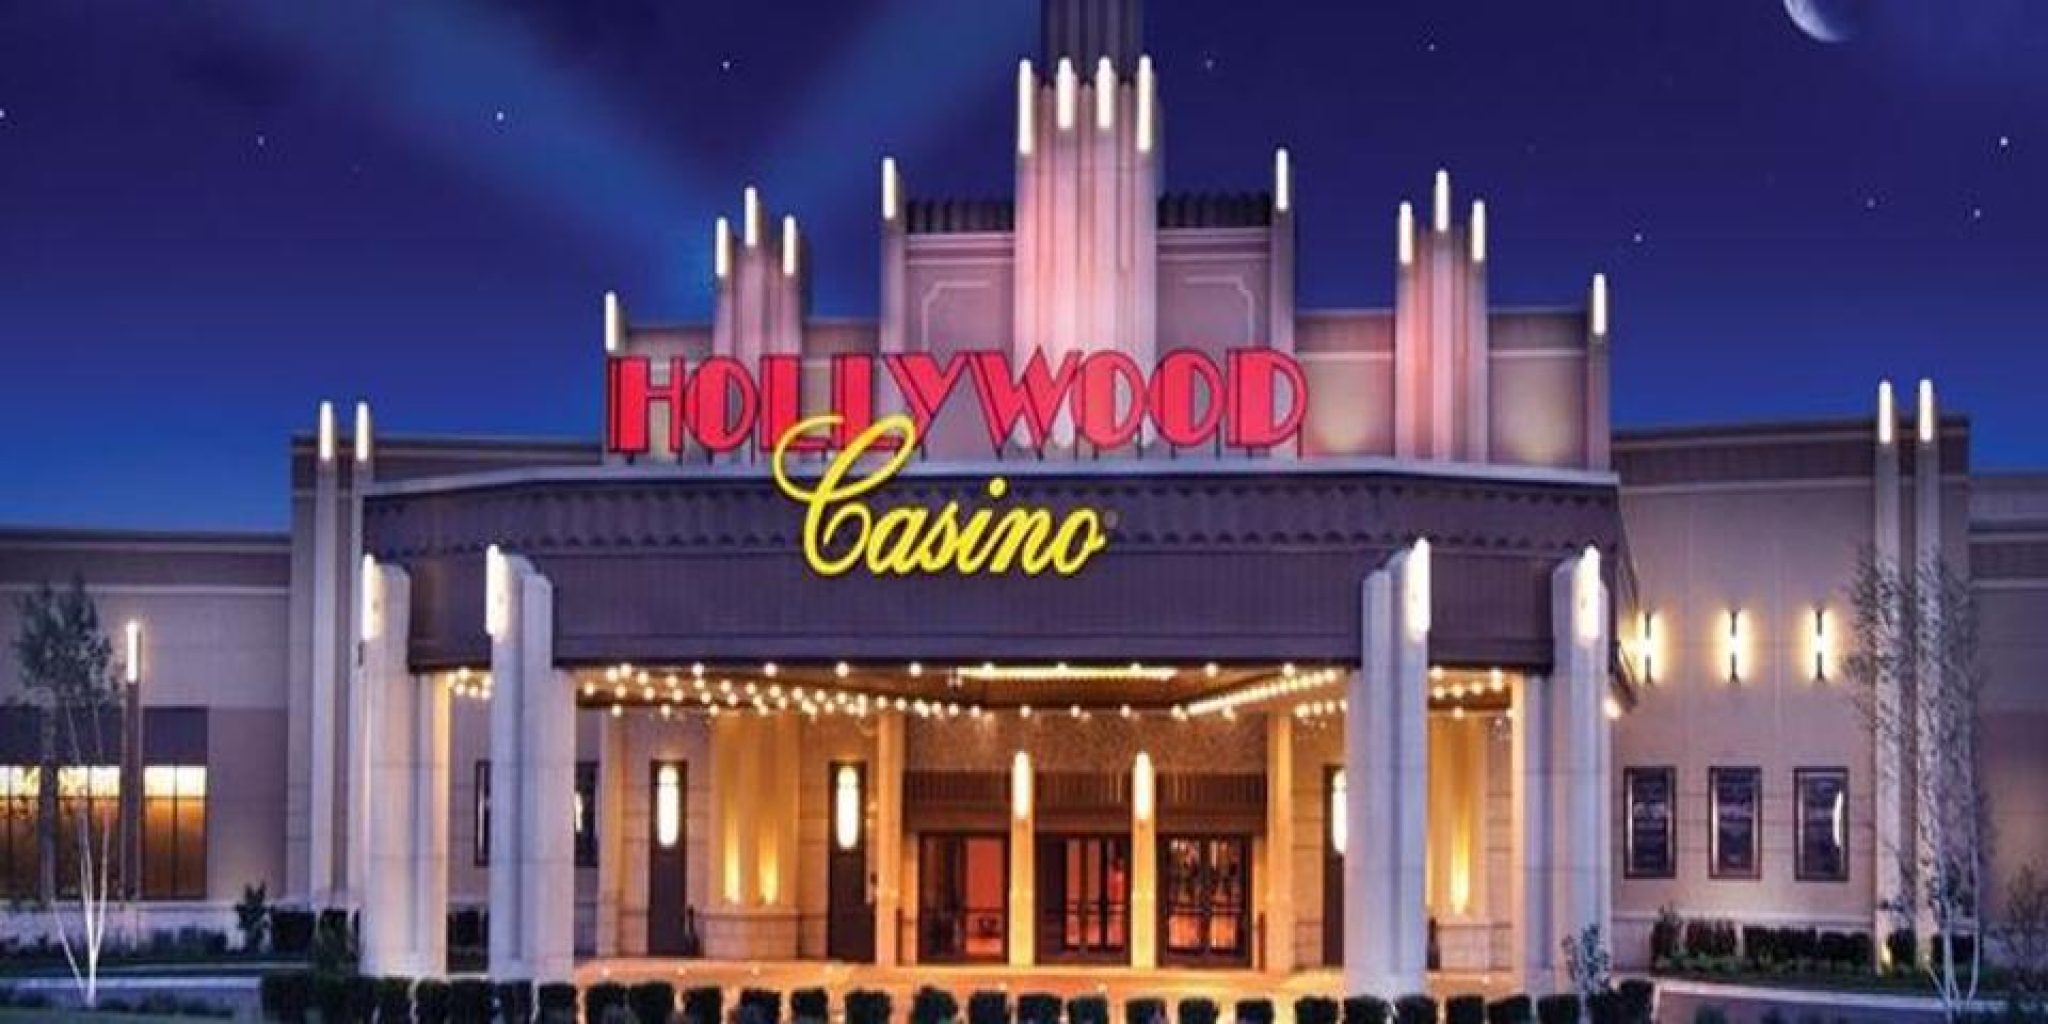 hollywood casino joliet illinois vip dining